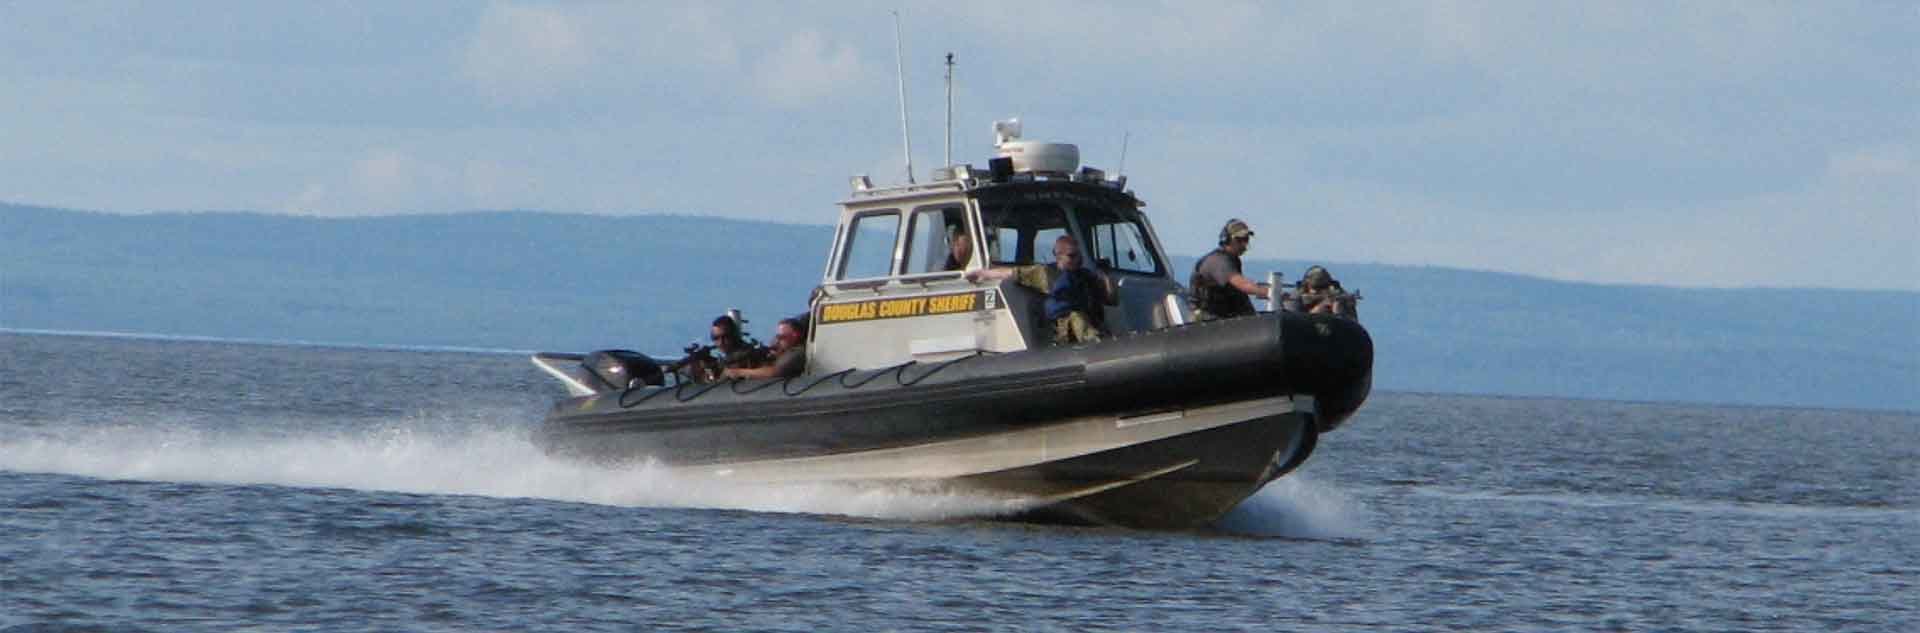 Douglas County Sheriff patrol on their boat.